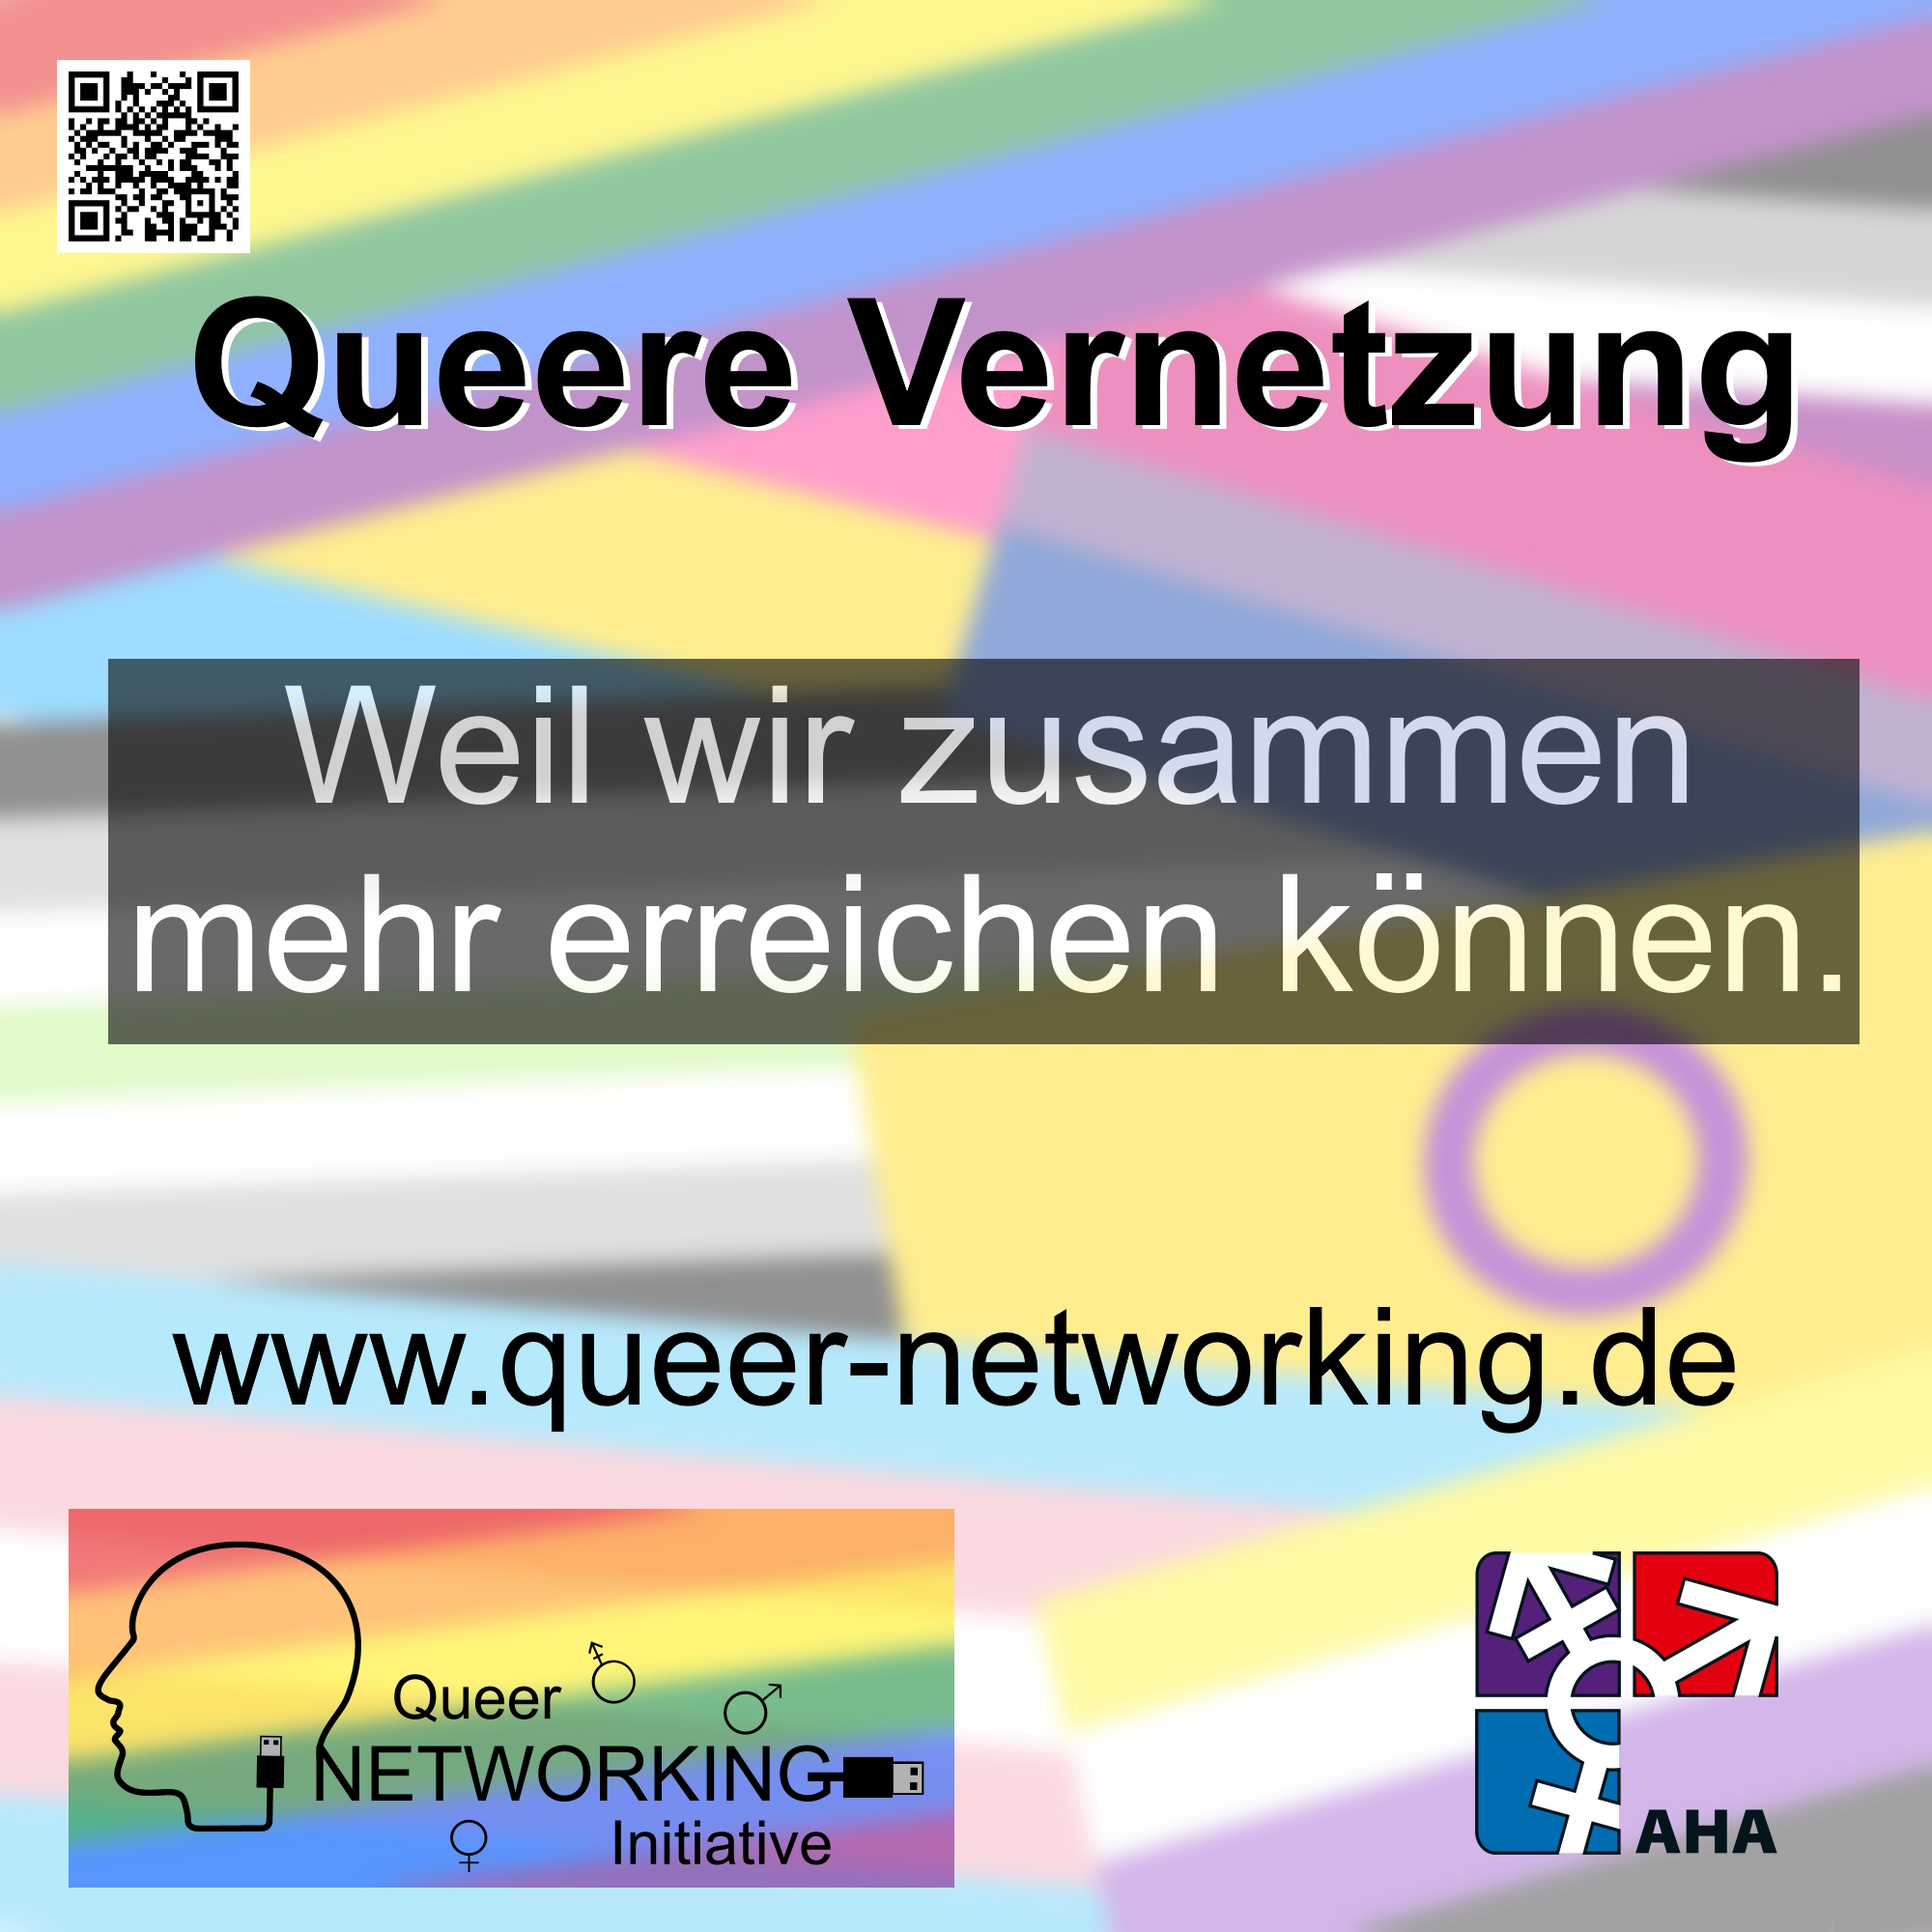 Queer network meeting